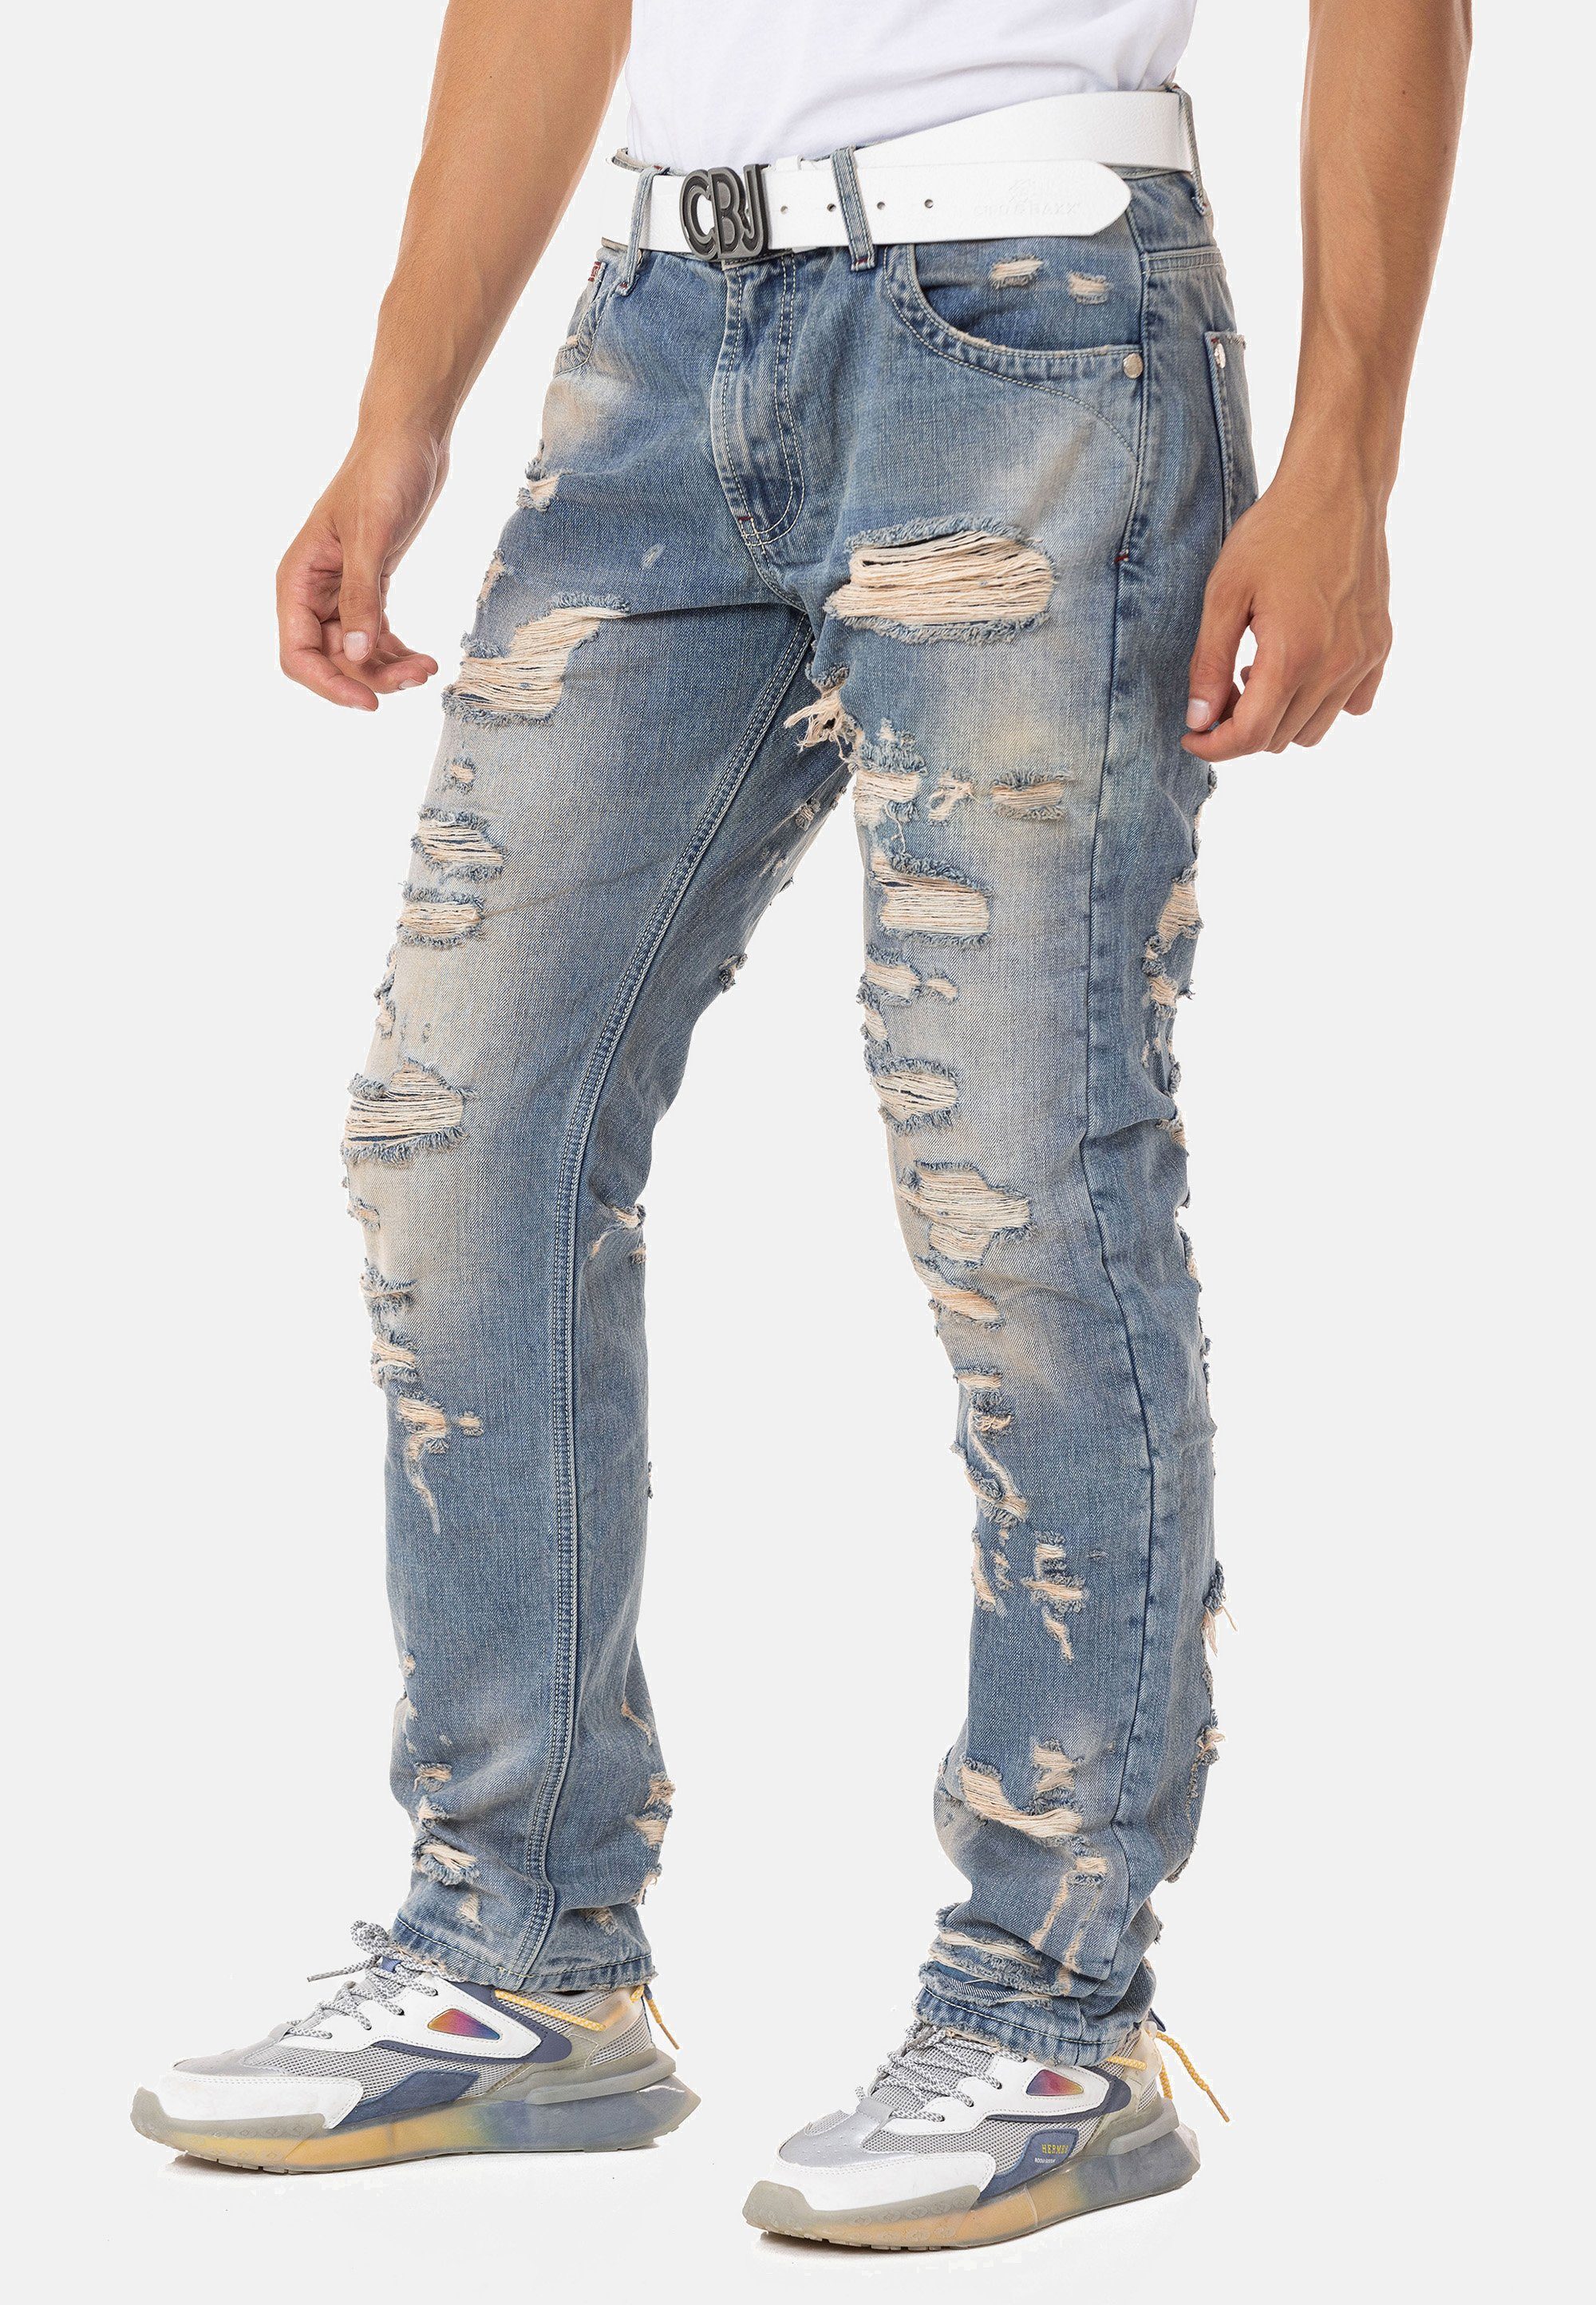 Baxx Bequeme blau coolen & Cipo im Destroyed-Look Jeans